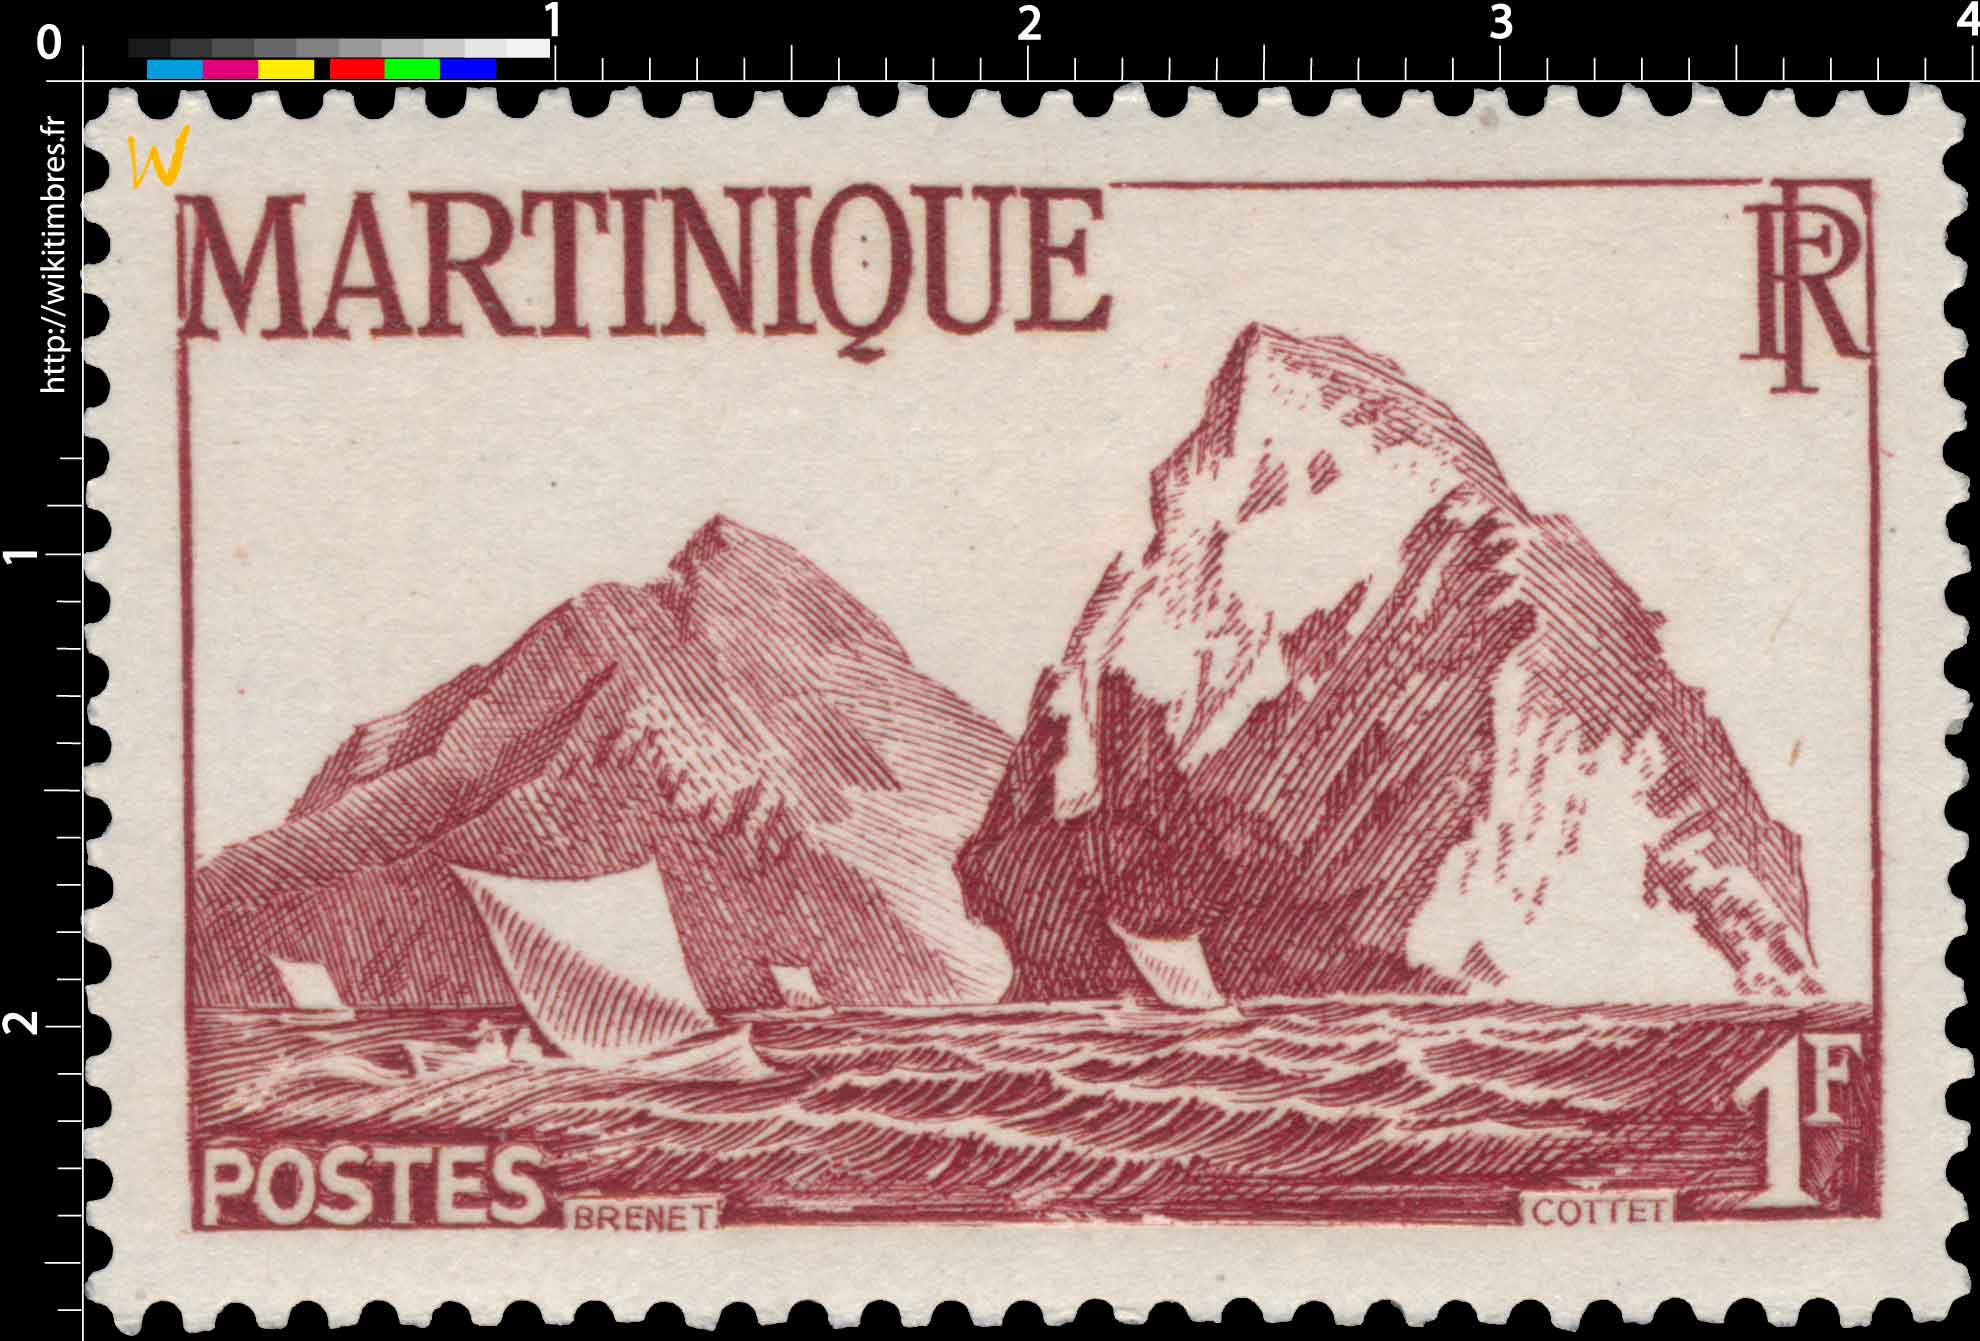 Martinique - Ilot rocheux